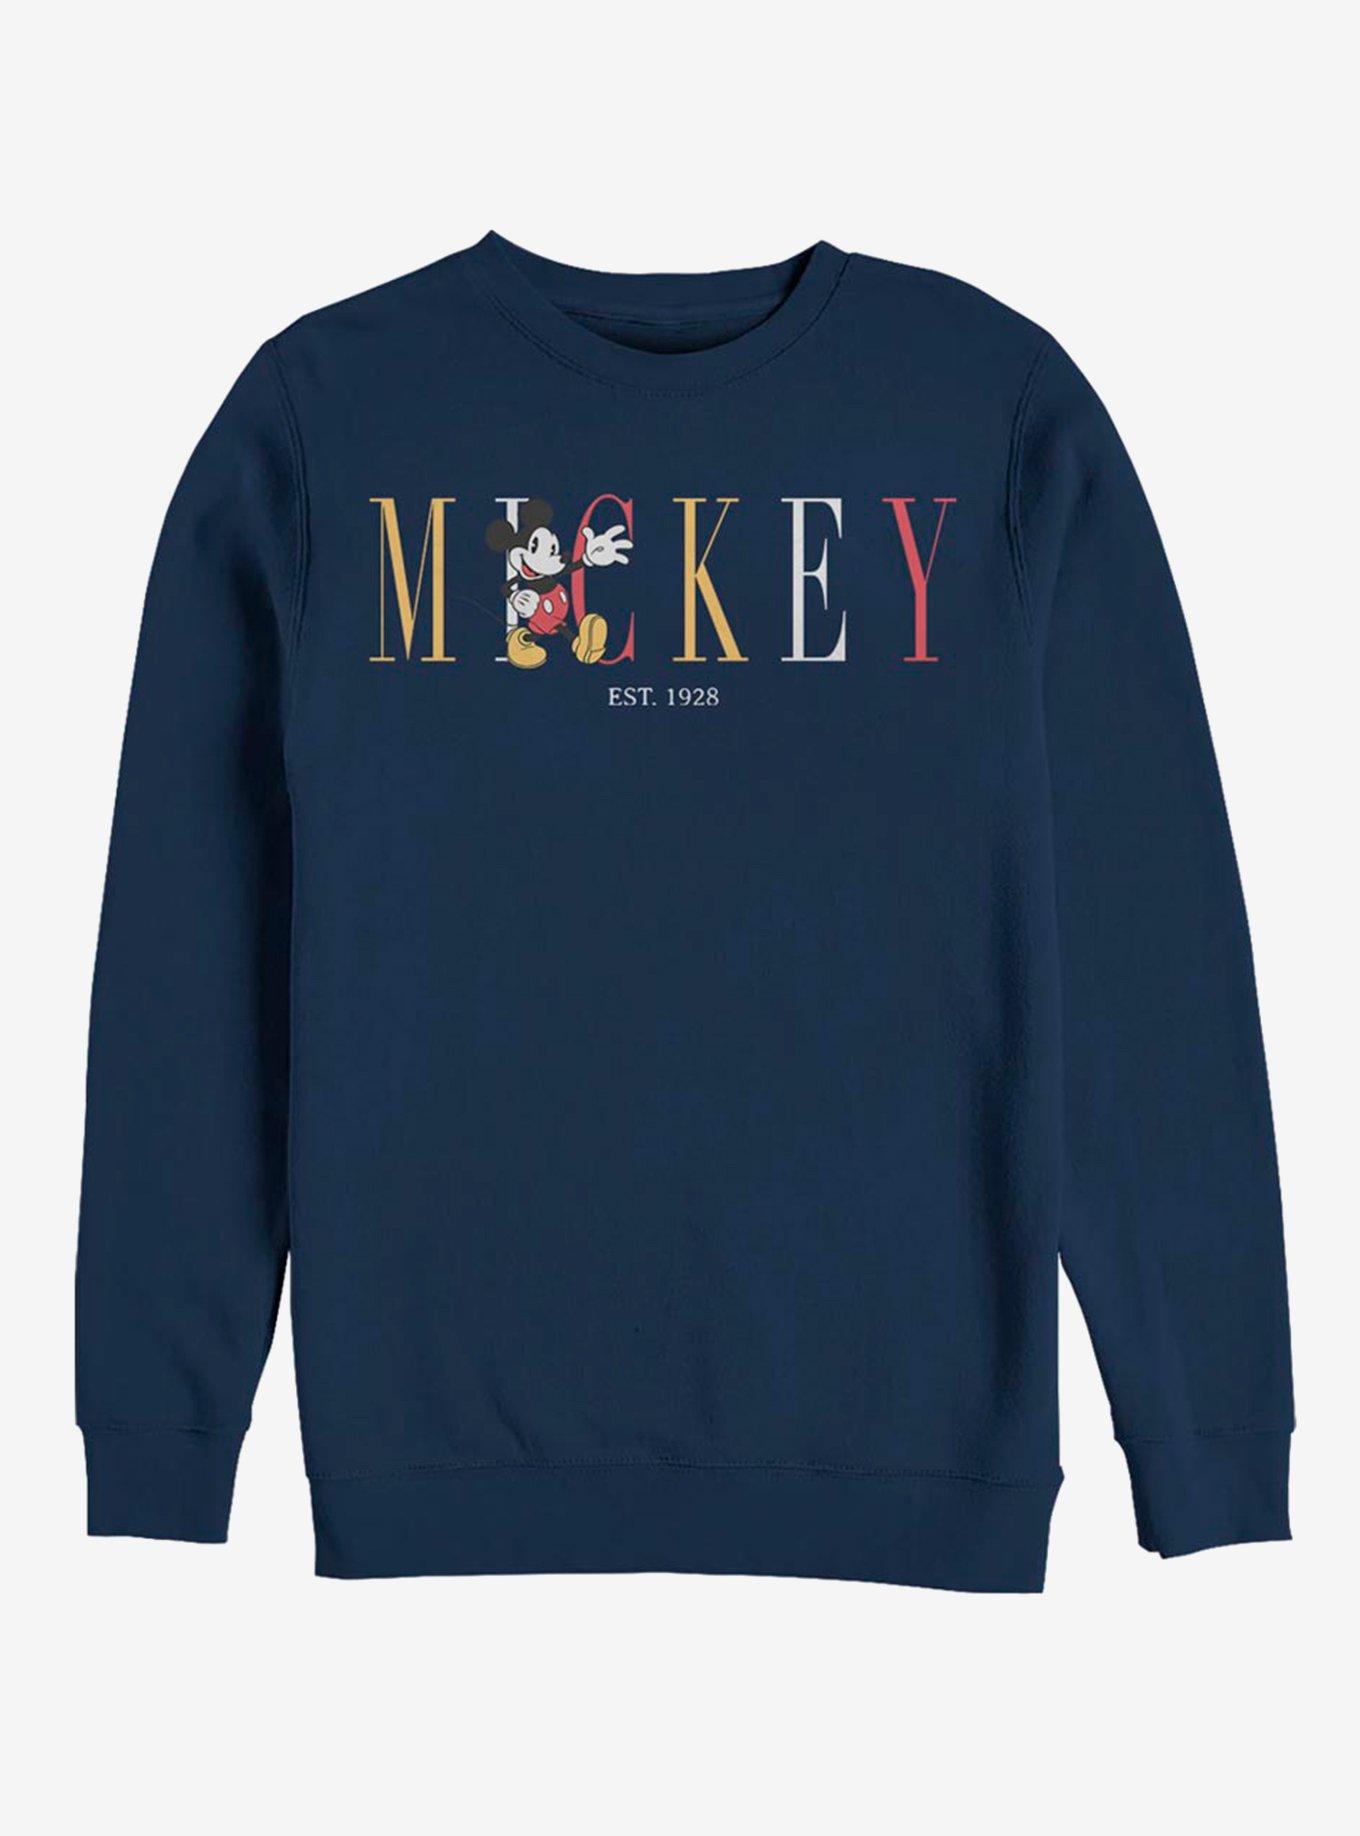 Toronto Blue Jays Mickey Mouse players shirt, hoodie, sweater